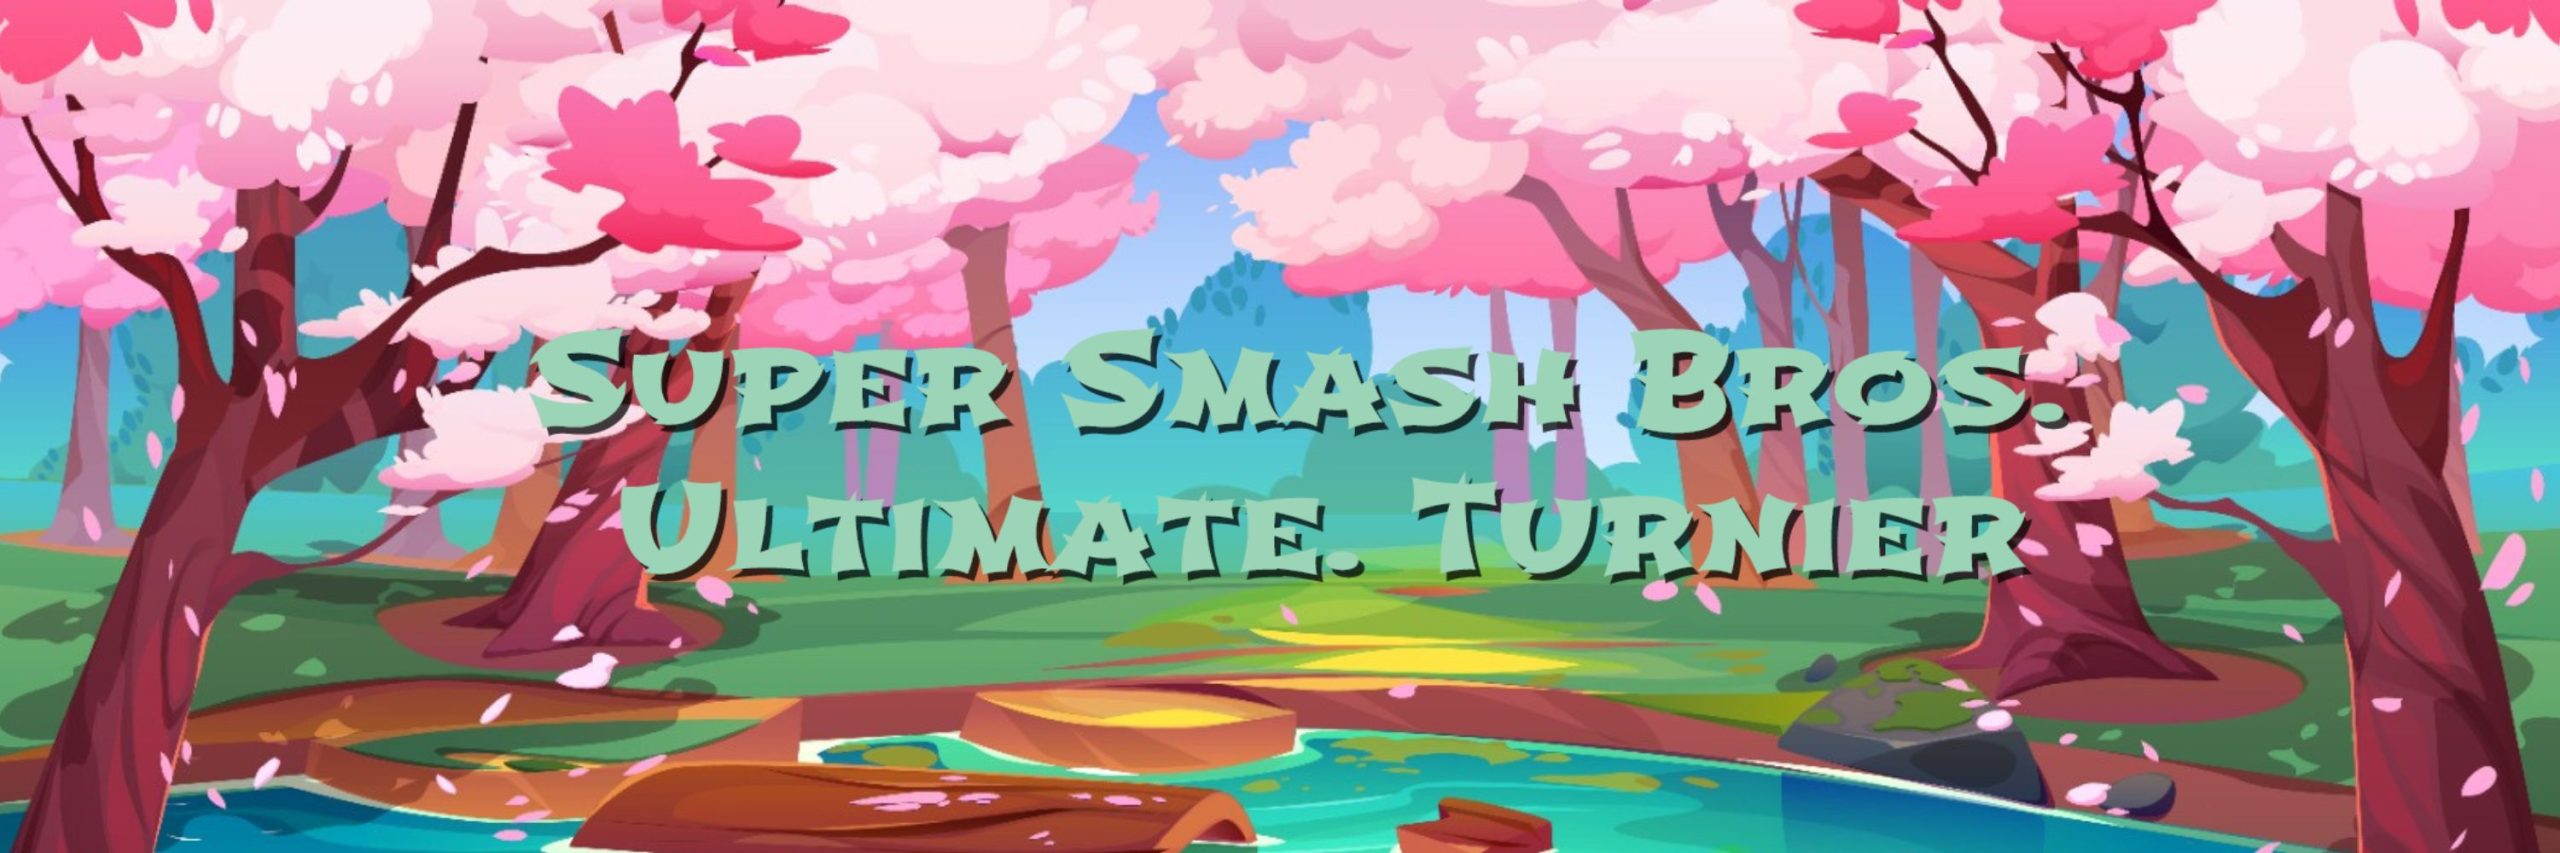 Super Smash Bros. Ultimate. Tournament